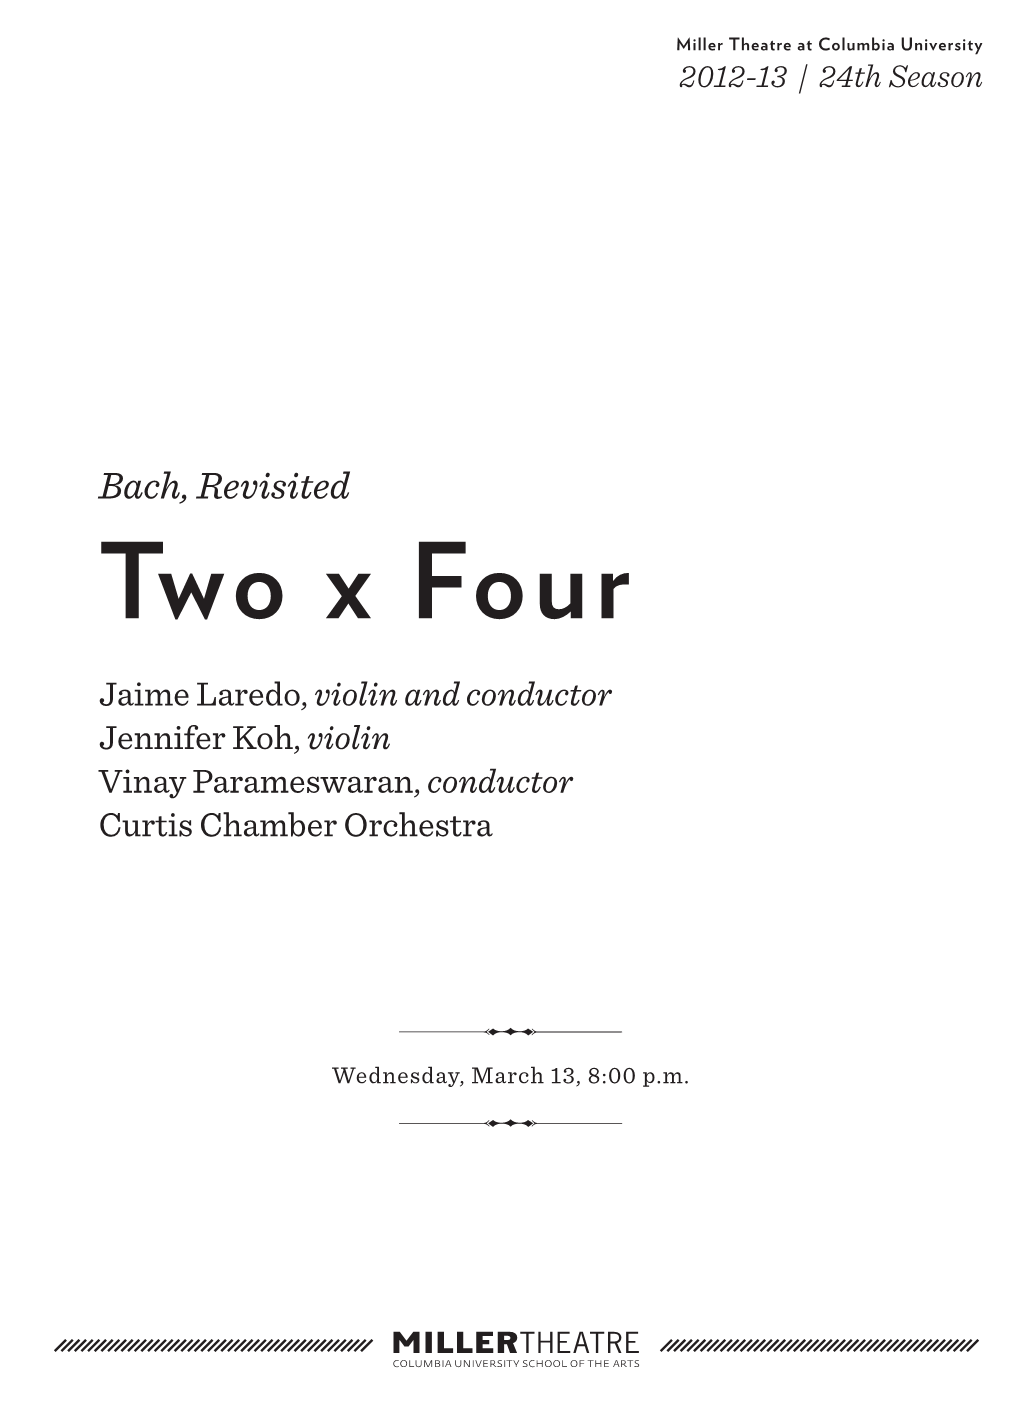 Two X Four Jaime Laredo, Violin and Conductor Jennifer Koh, Violin Vinay Parameswaran, Conductor Curtis Chamber Orchestra